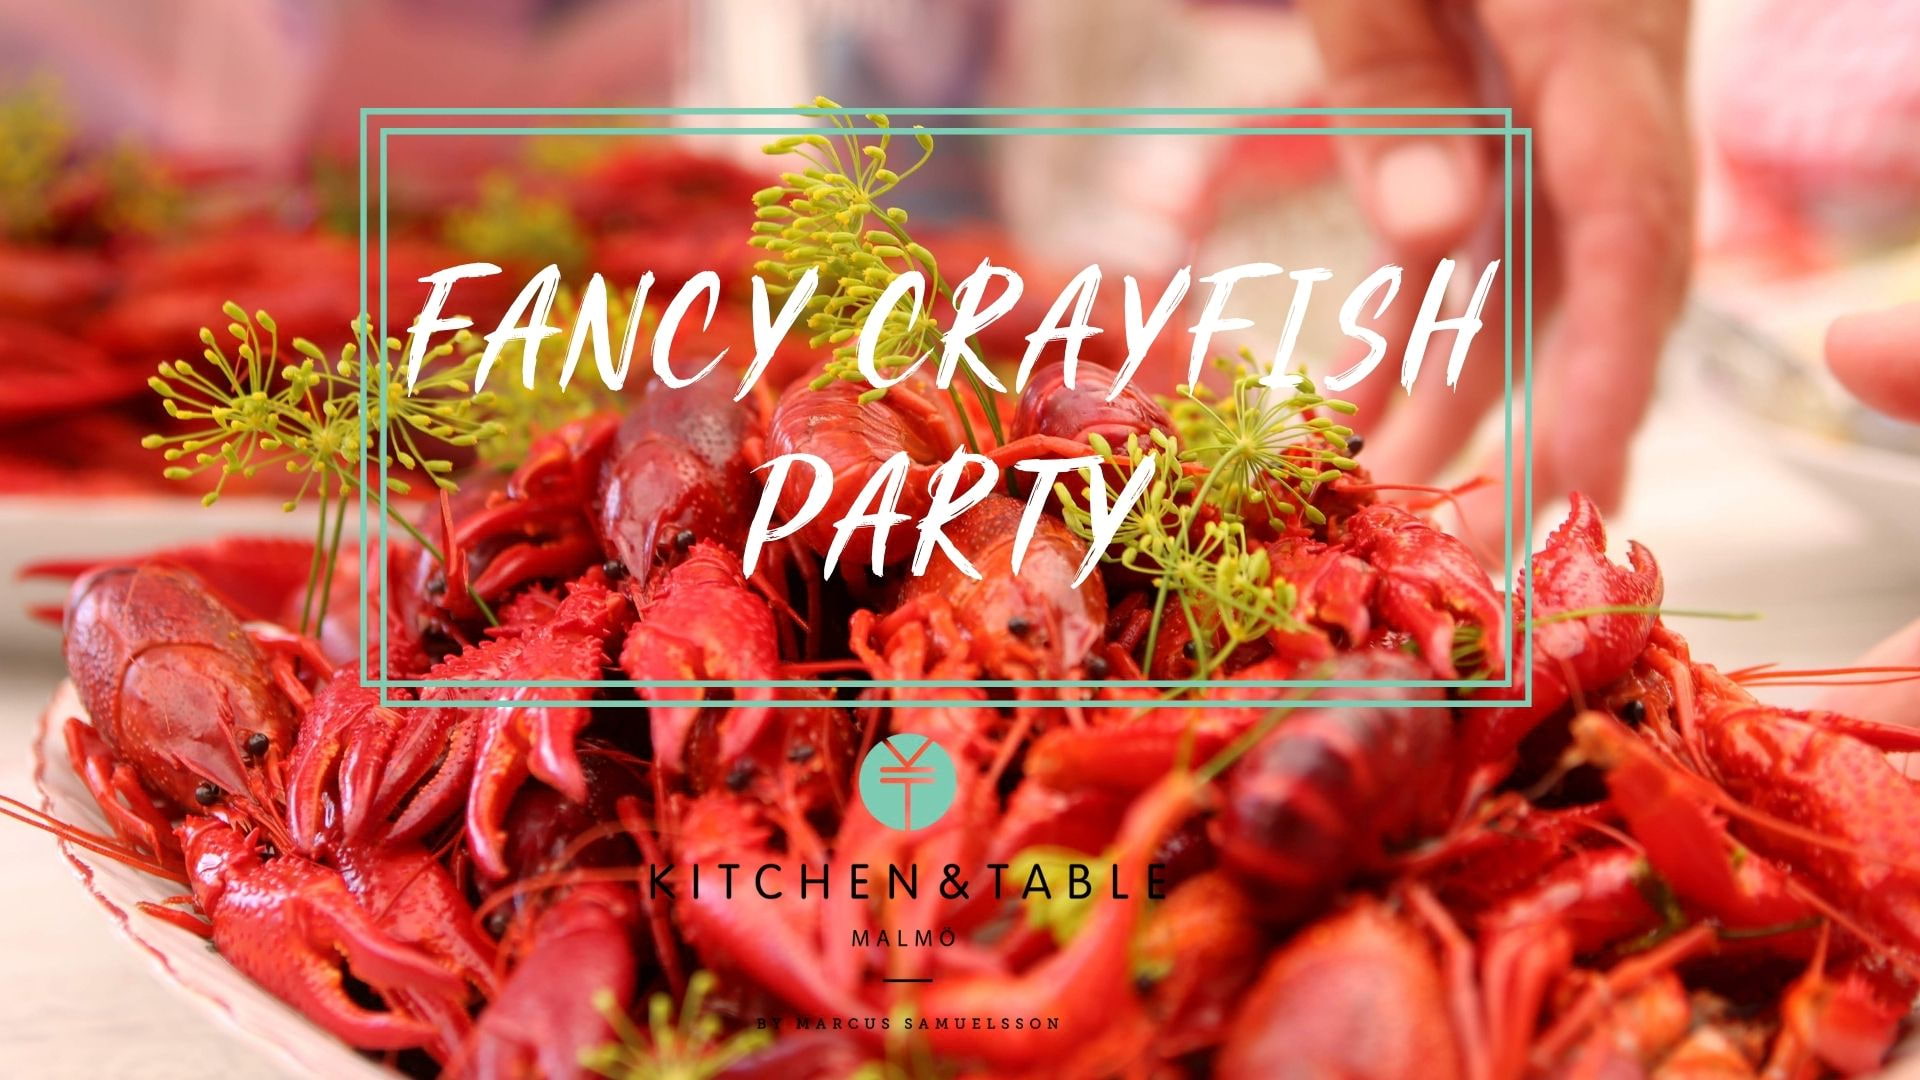 "Fancy Crayfish Party" på Kitchen & Table